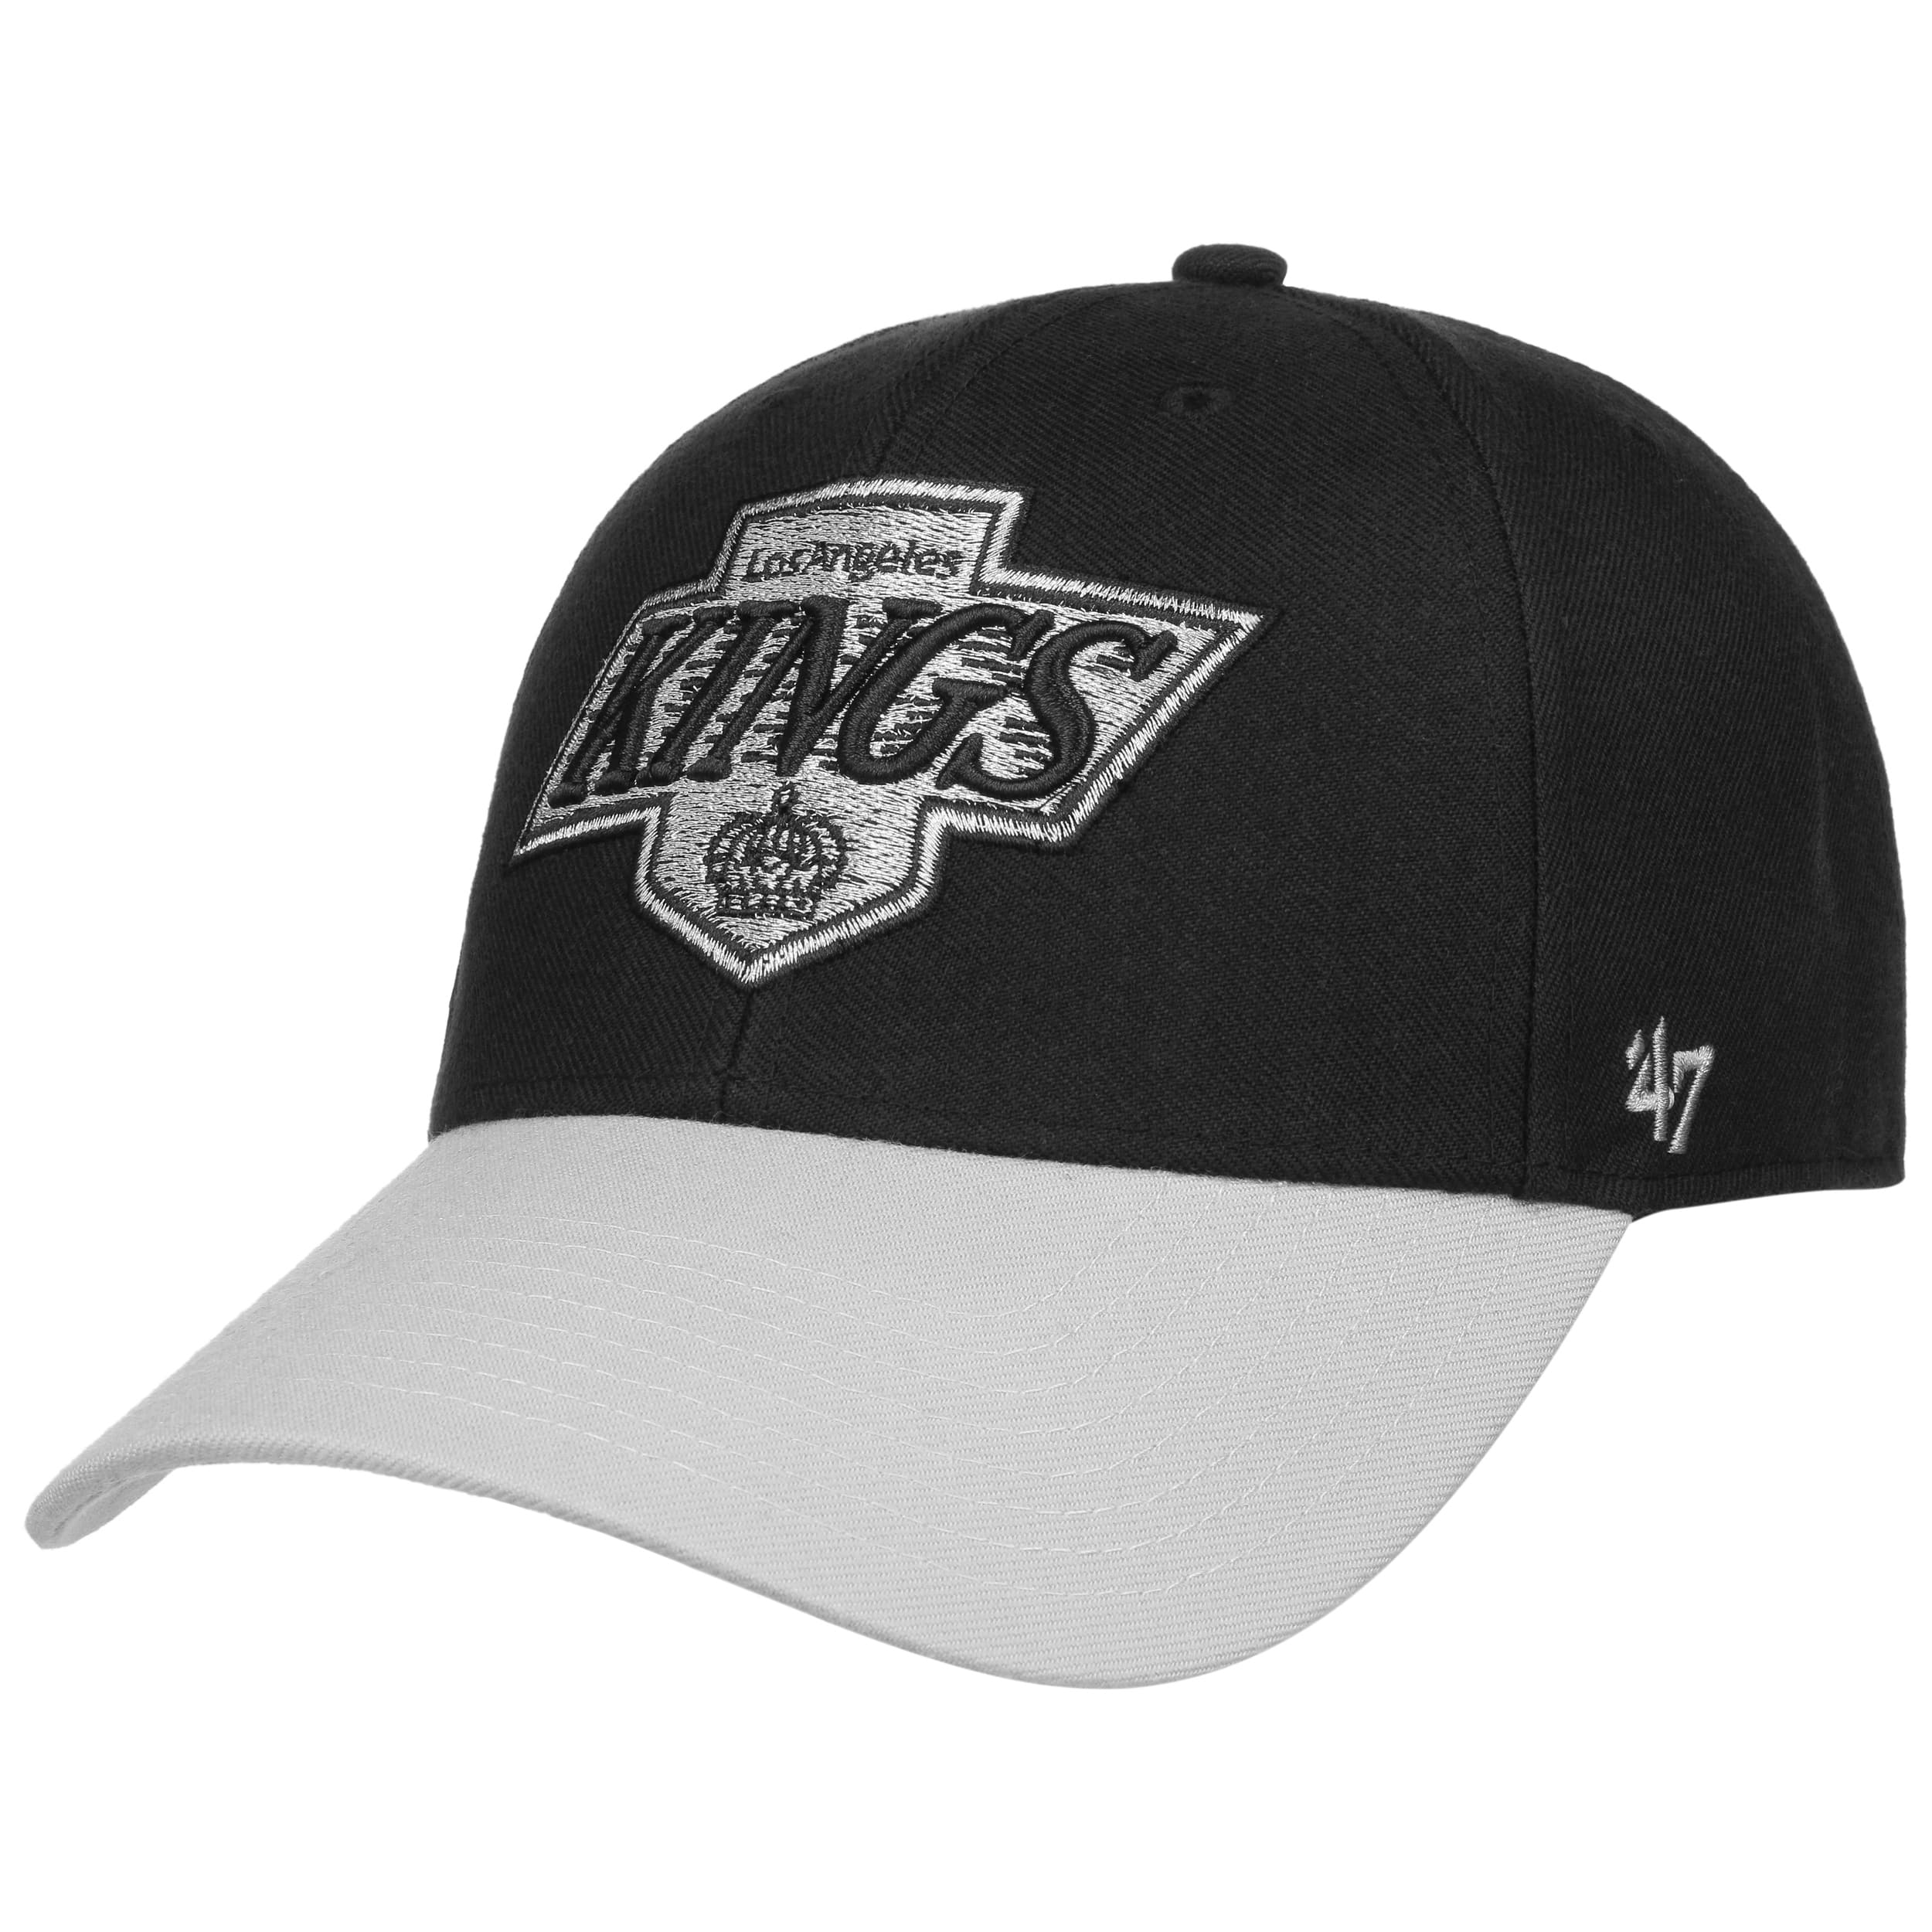 NHL Vintage LA Kings Twotone Cap By 47 Brand Black.64213 Rf4 